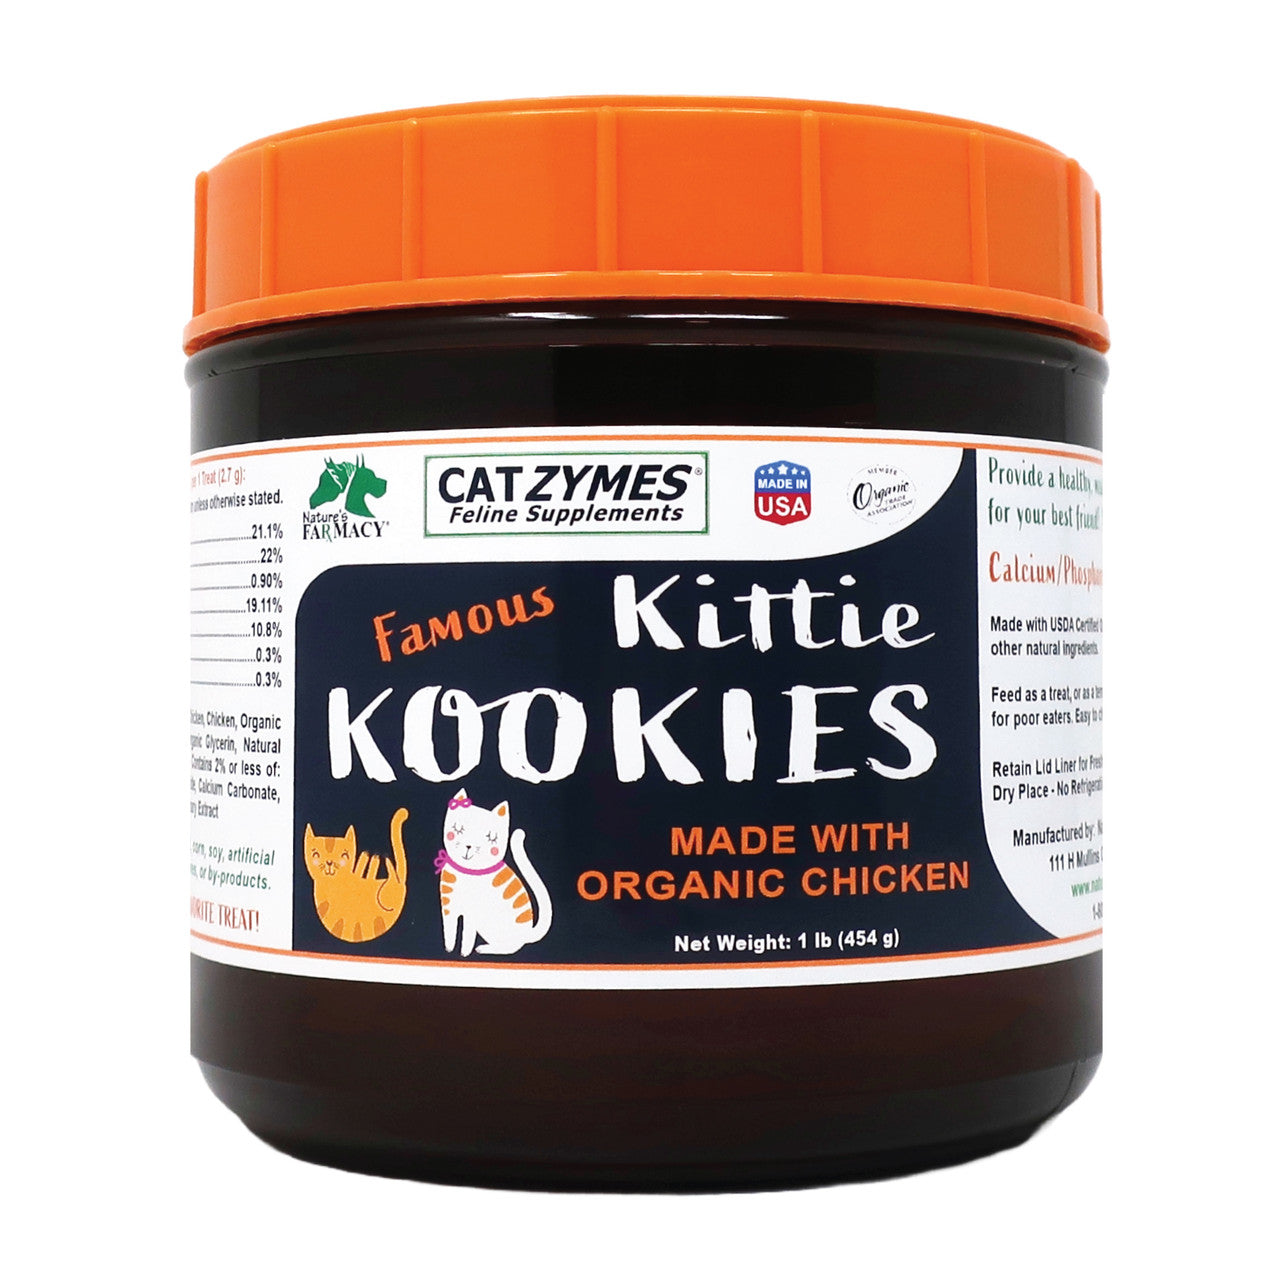 Catzymes Kittie Kookies Treats with 85% Organic Chicken